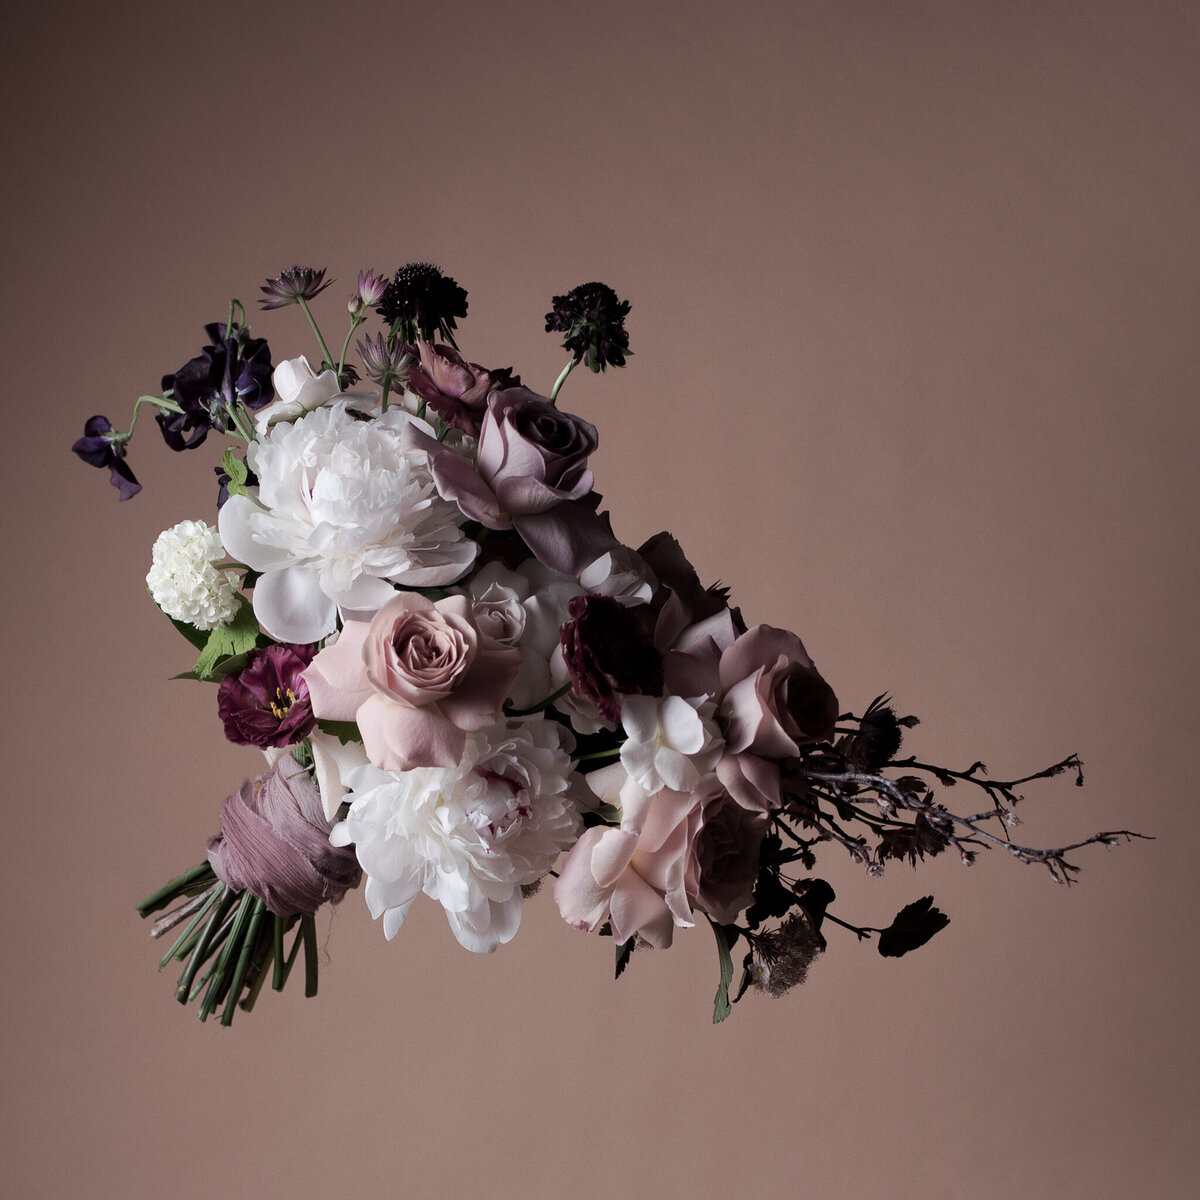 Elegant purple and white bouquet by Foxglove Studio, contemporary Calgary, Alberta wedding florist, featured on the Brontë Bride Vendor Guide.